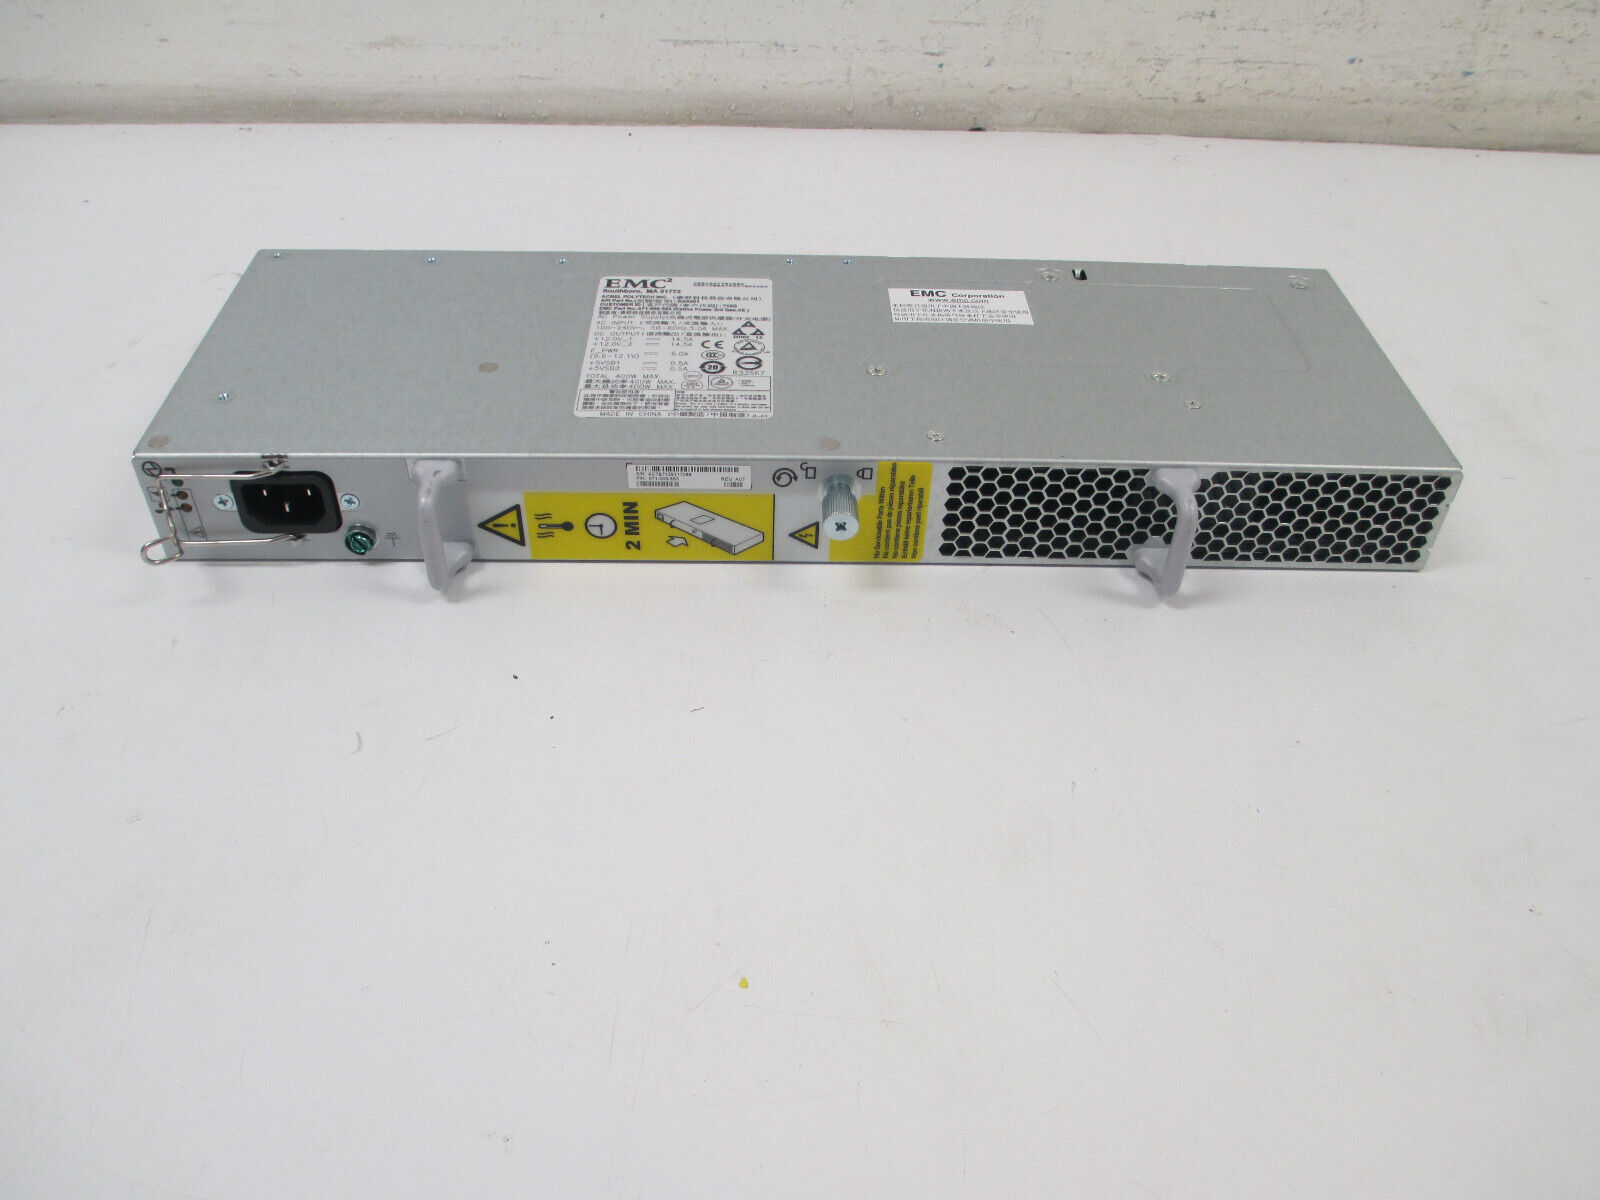 EMC DAE 071-000-553 400 Watt Power Supply From EMC KTN-STL3